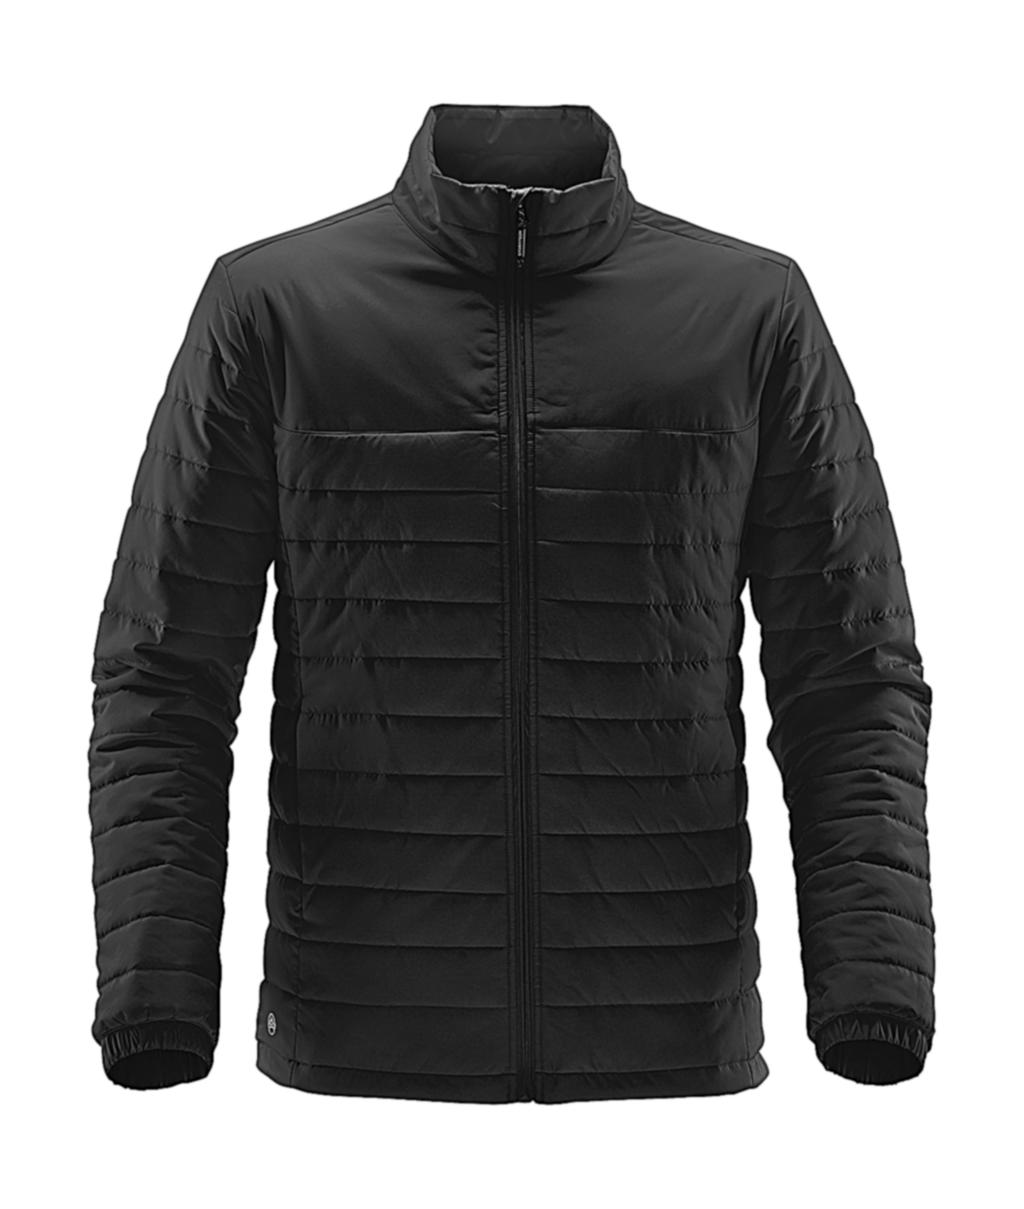  Nautilus Thermal Jacket in Farbe Black